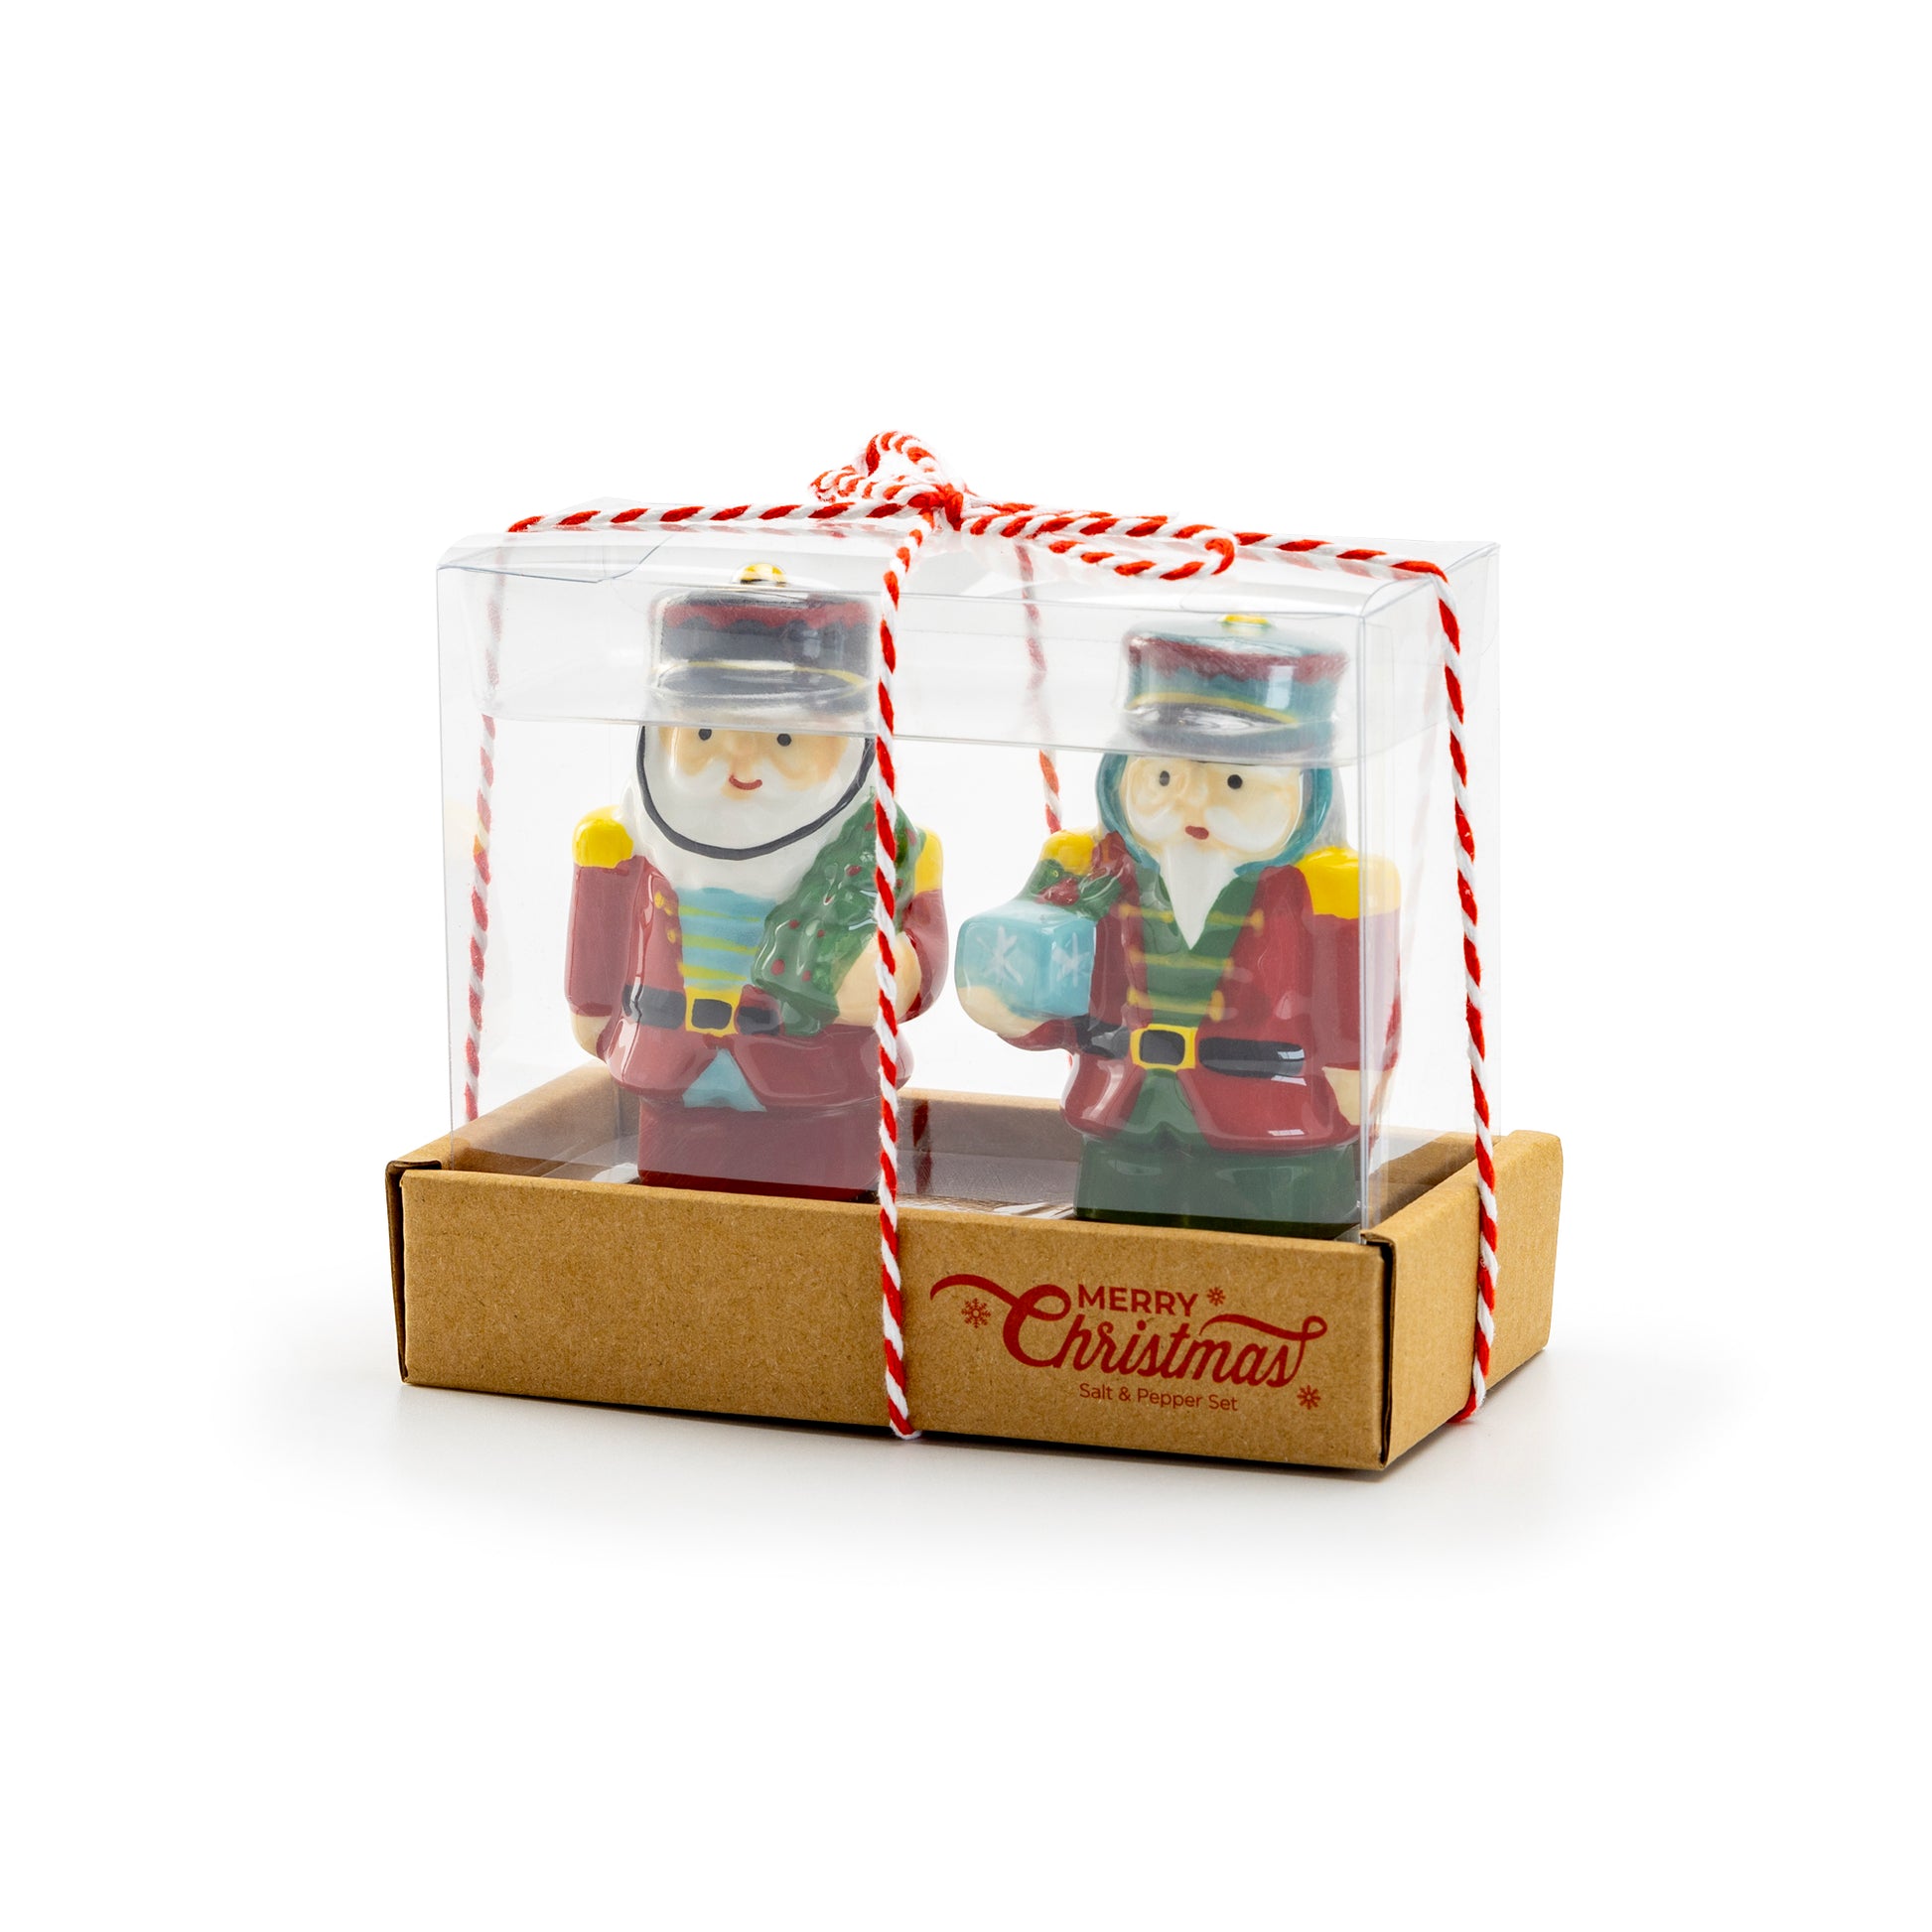 Gracie China Shop Nutcracker Figurine Salt and Pepper Shaker Set with Merry Christmas Gift Box